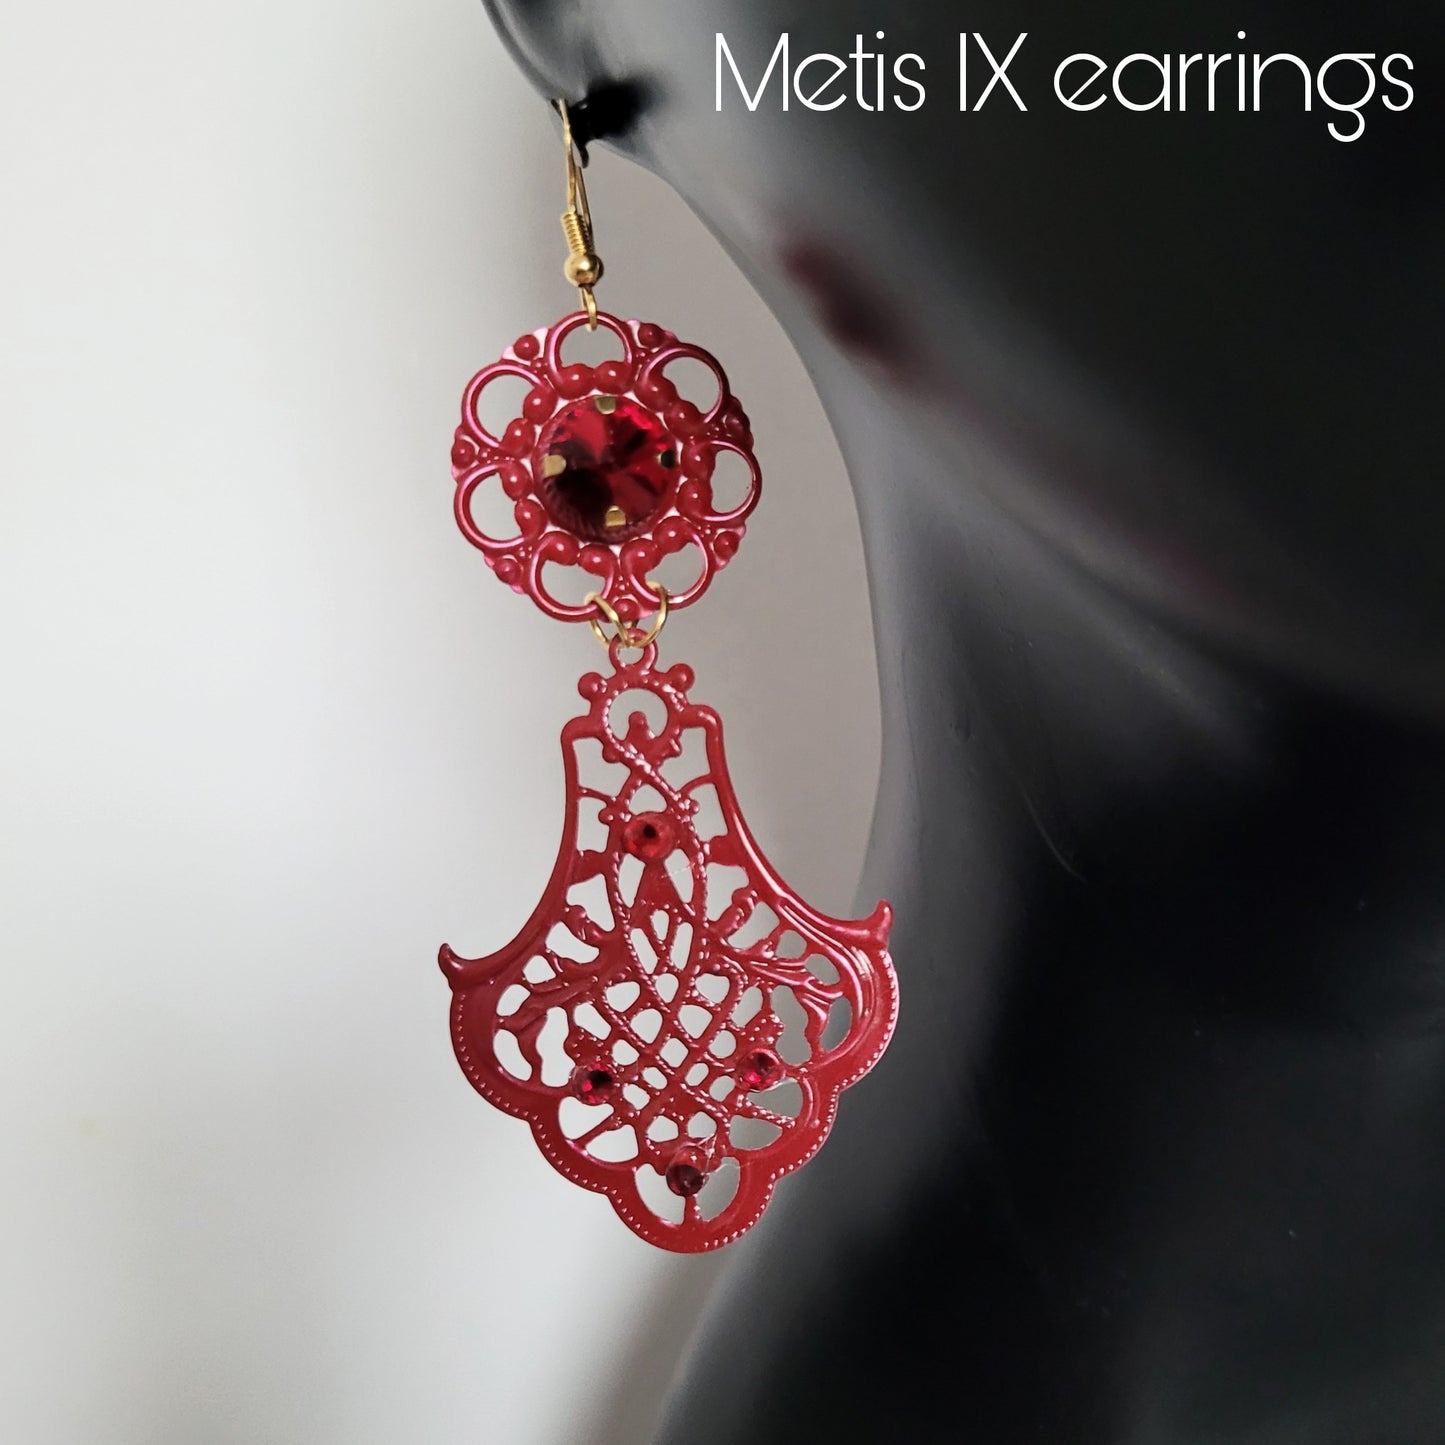 Deusa ex Machina collection: The Metis earrings